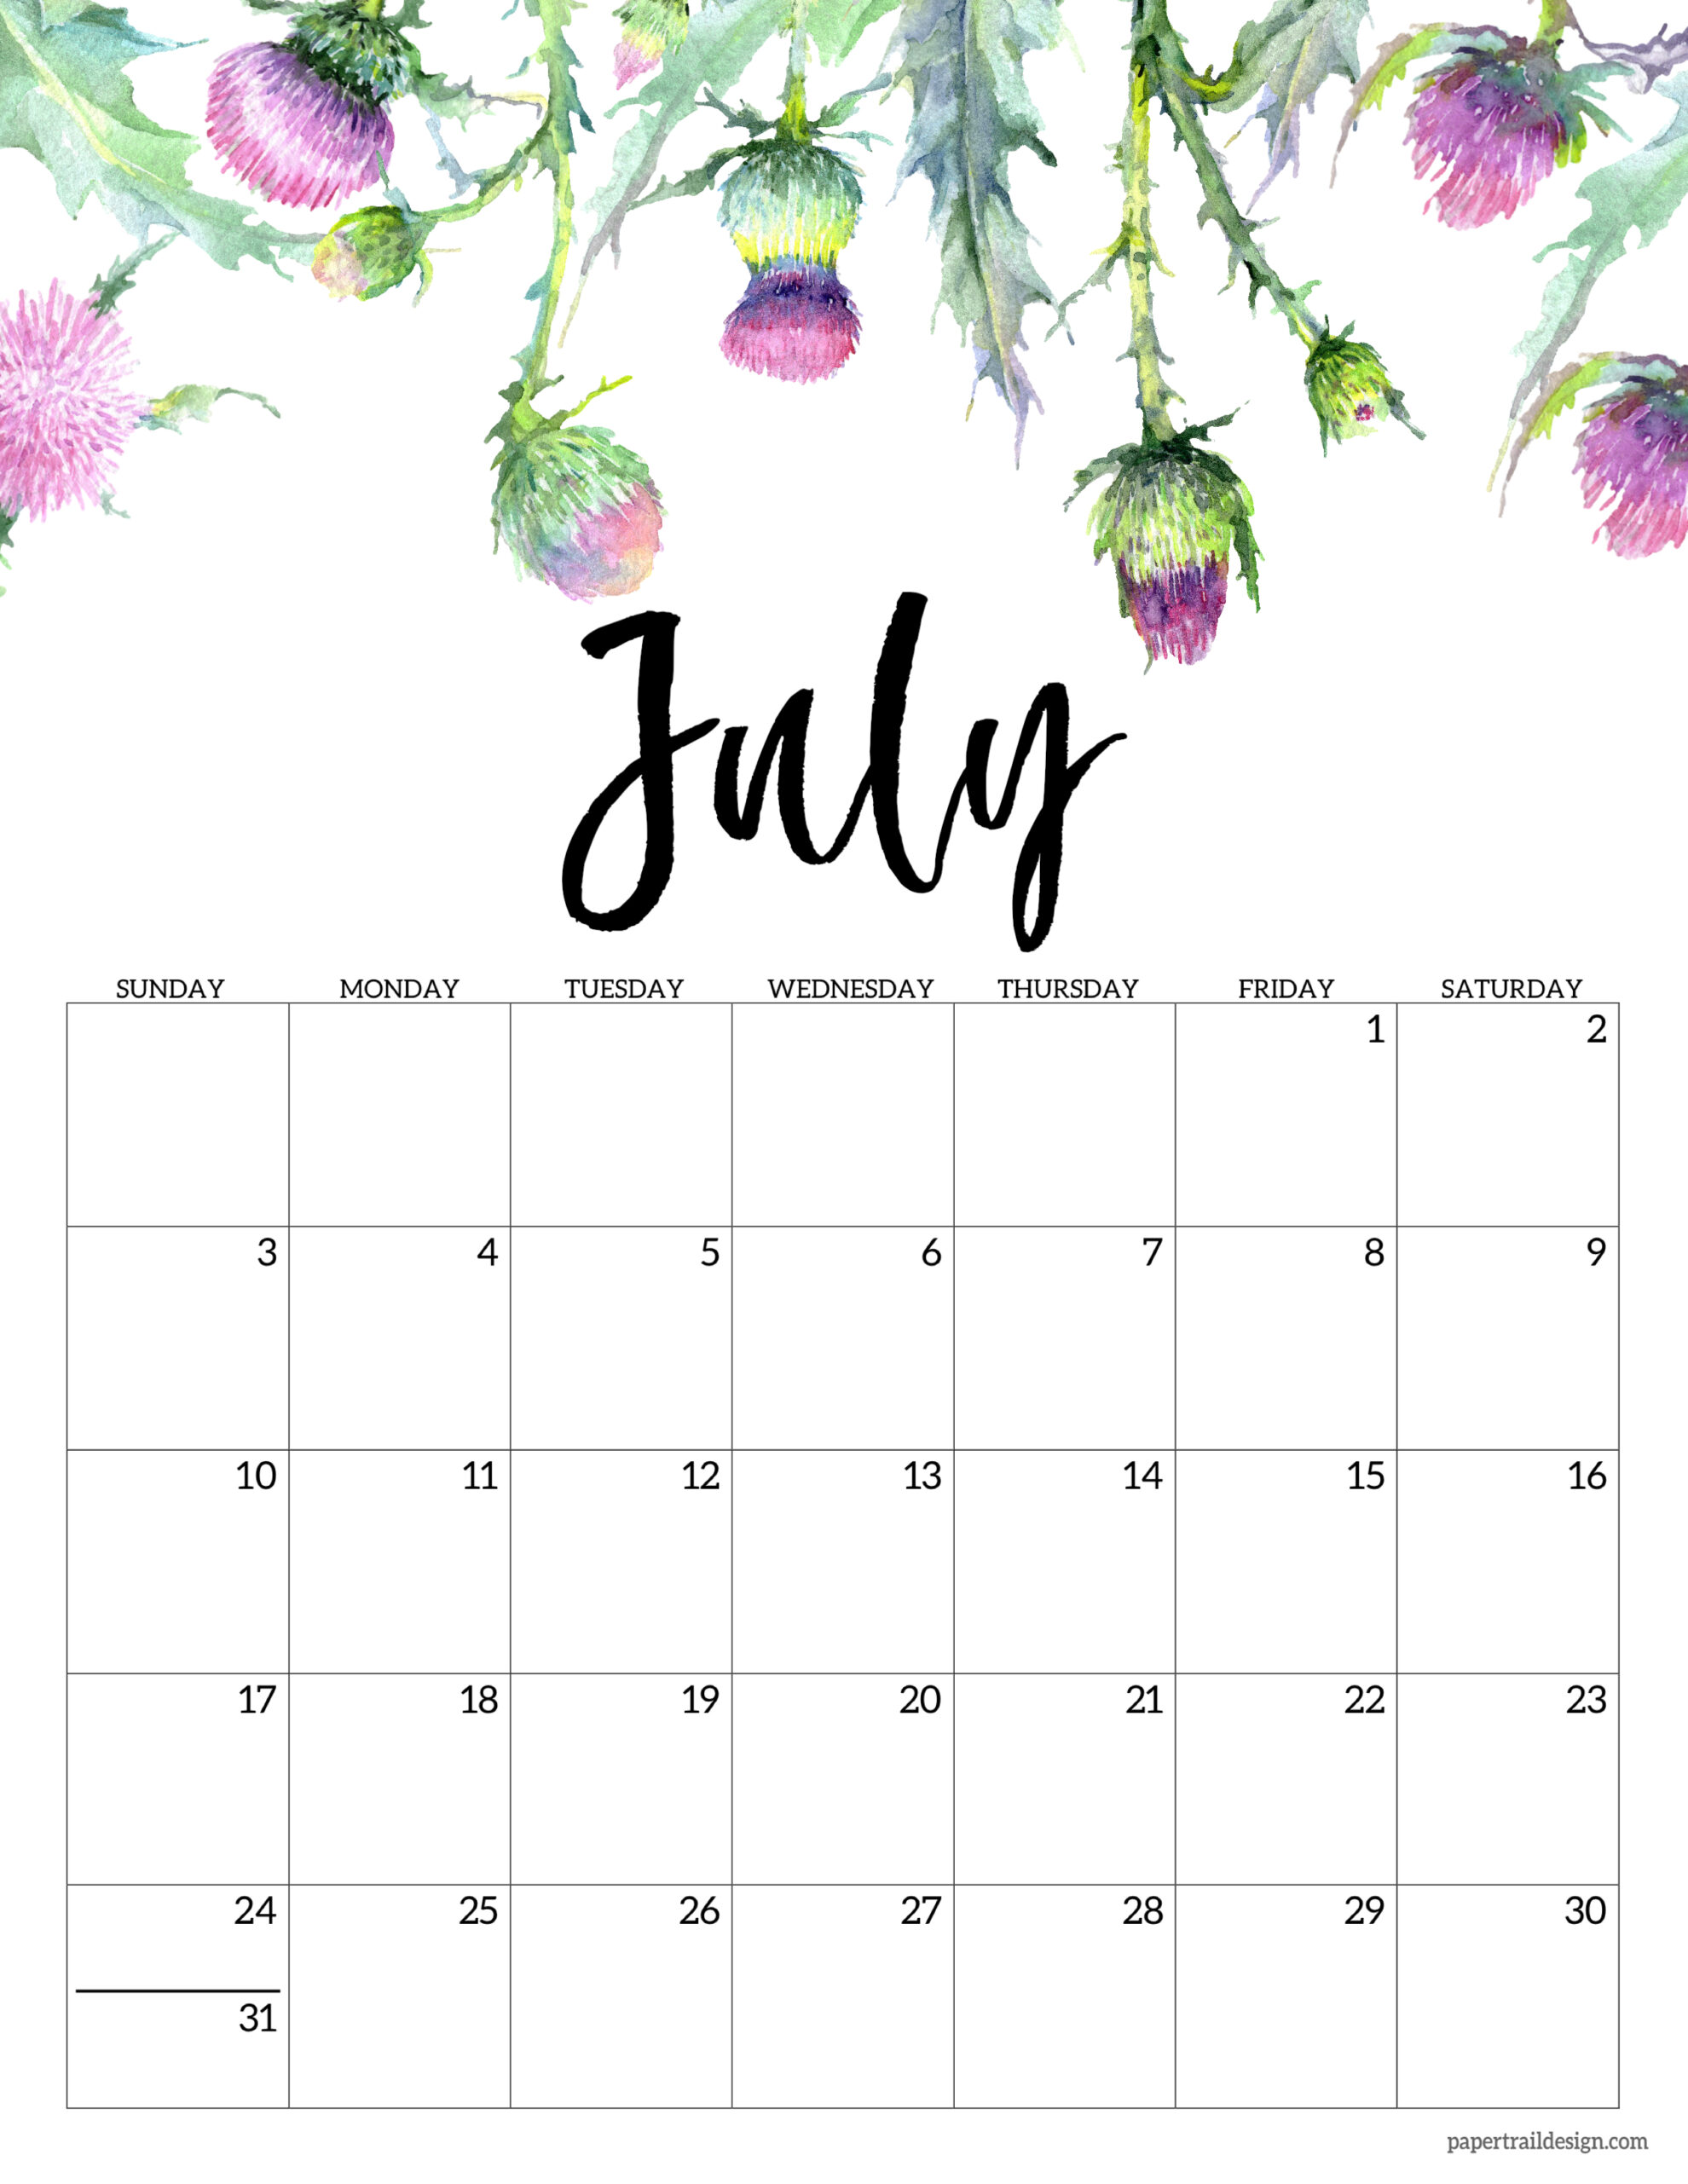 July 2022 Calendar Wallpapers - Wallpaper Cave